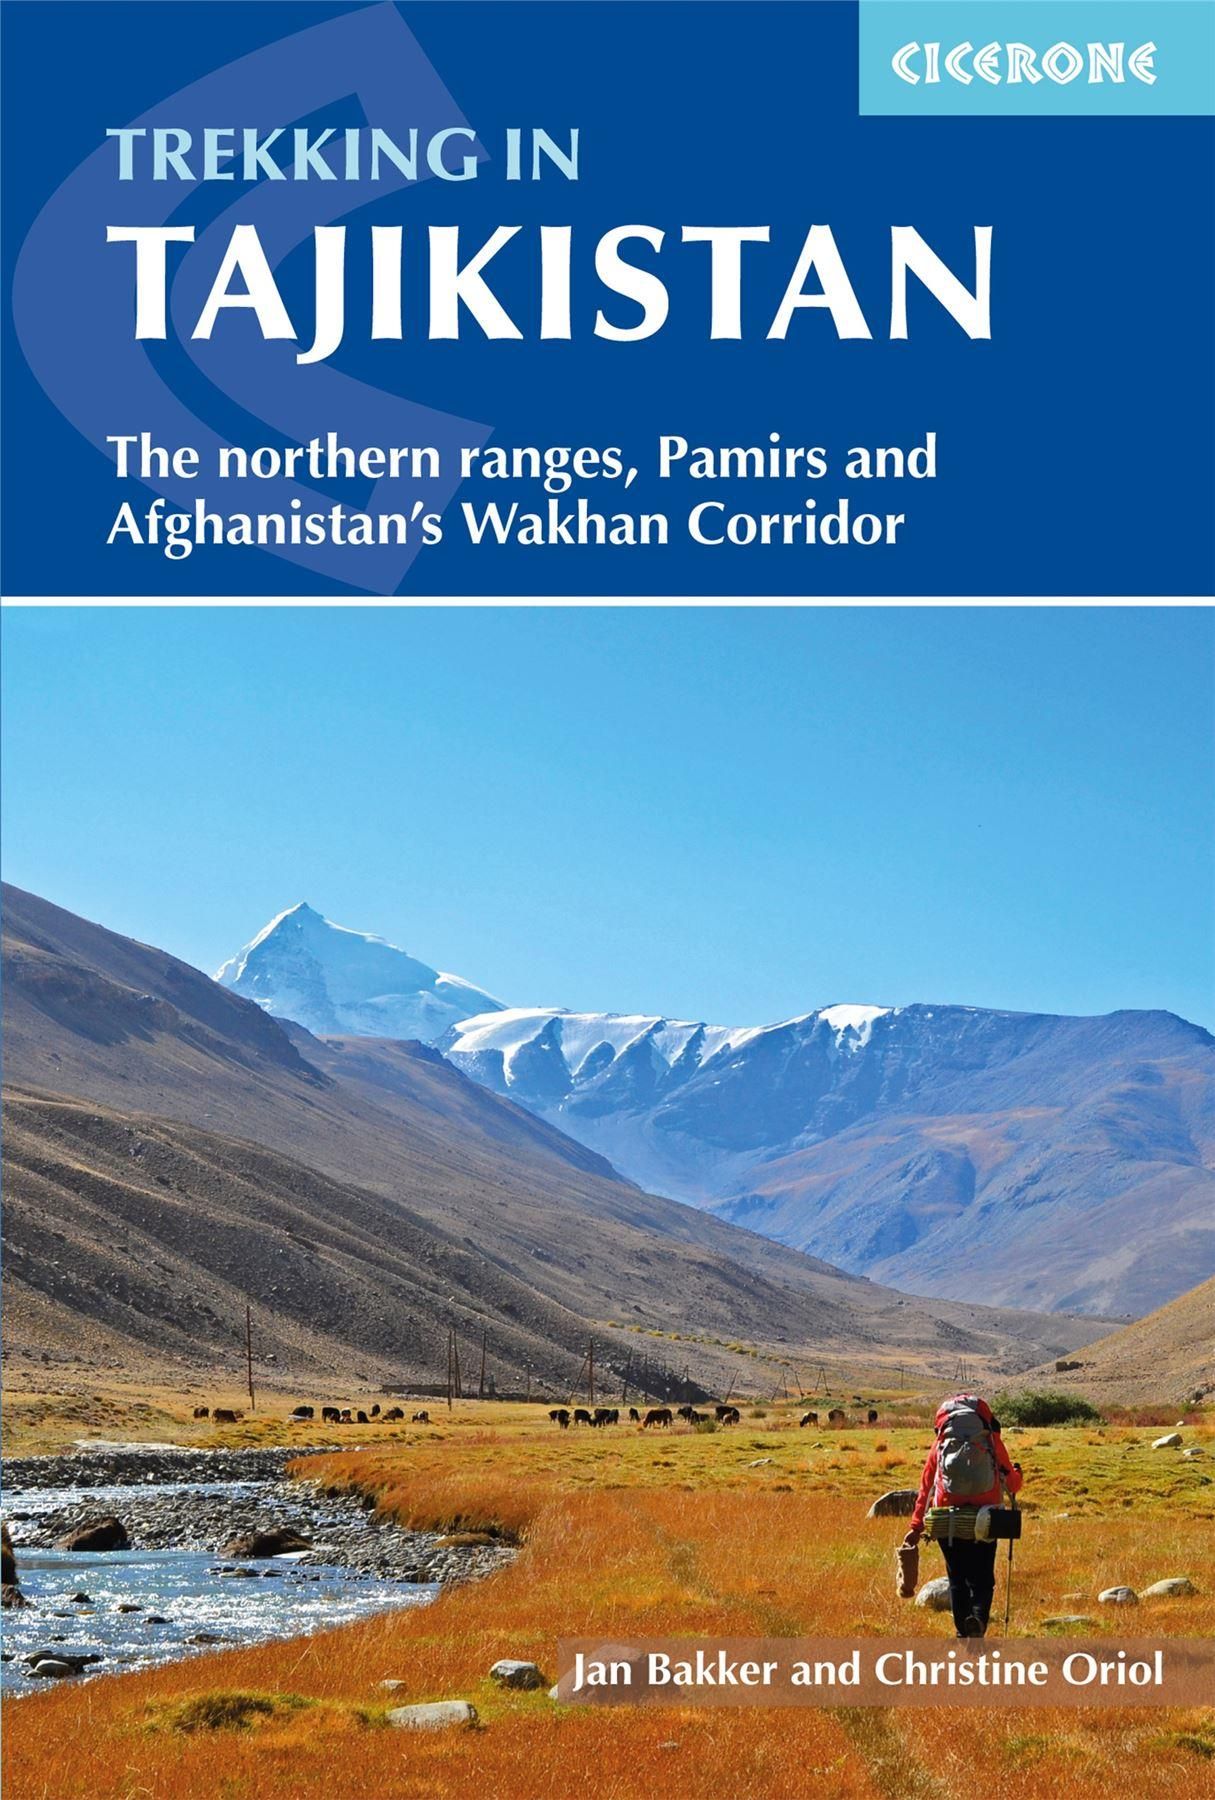 Image of Cicerone : Trekking in Tajikistan